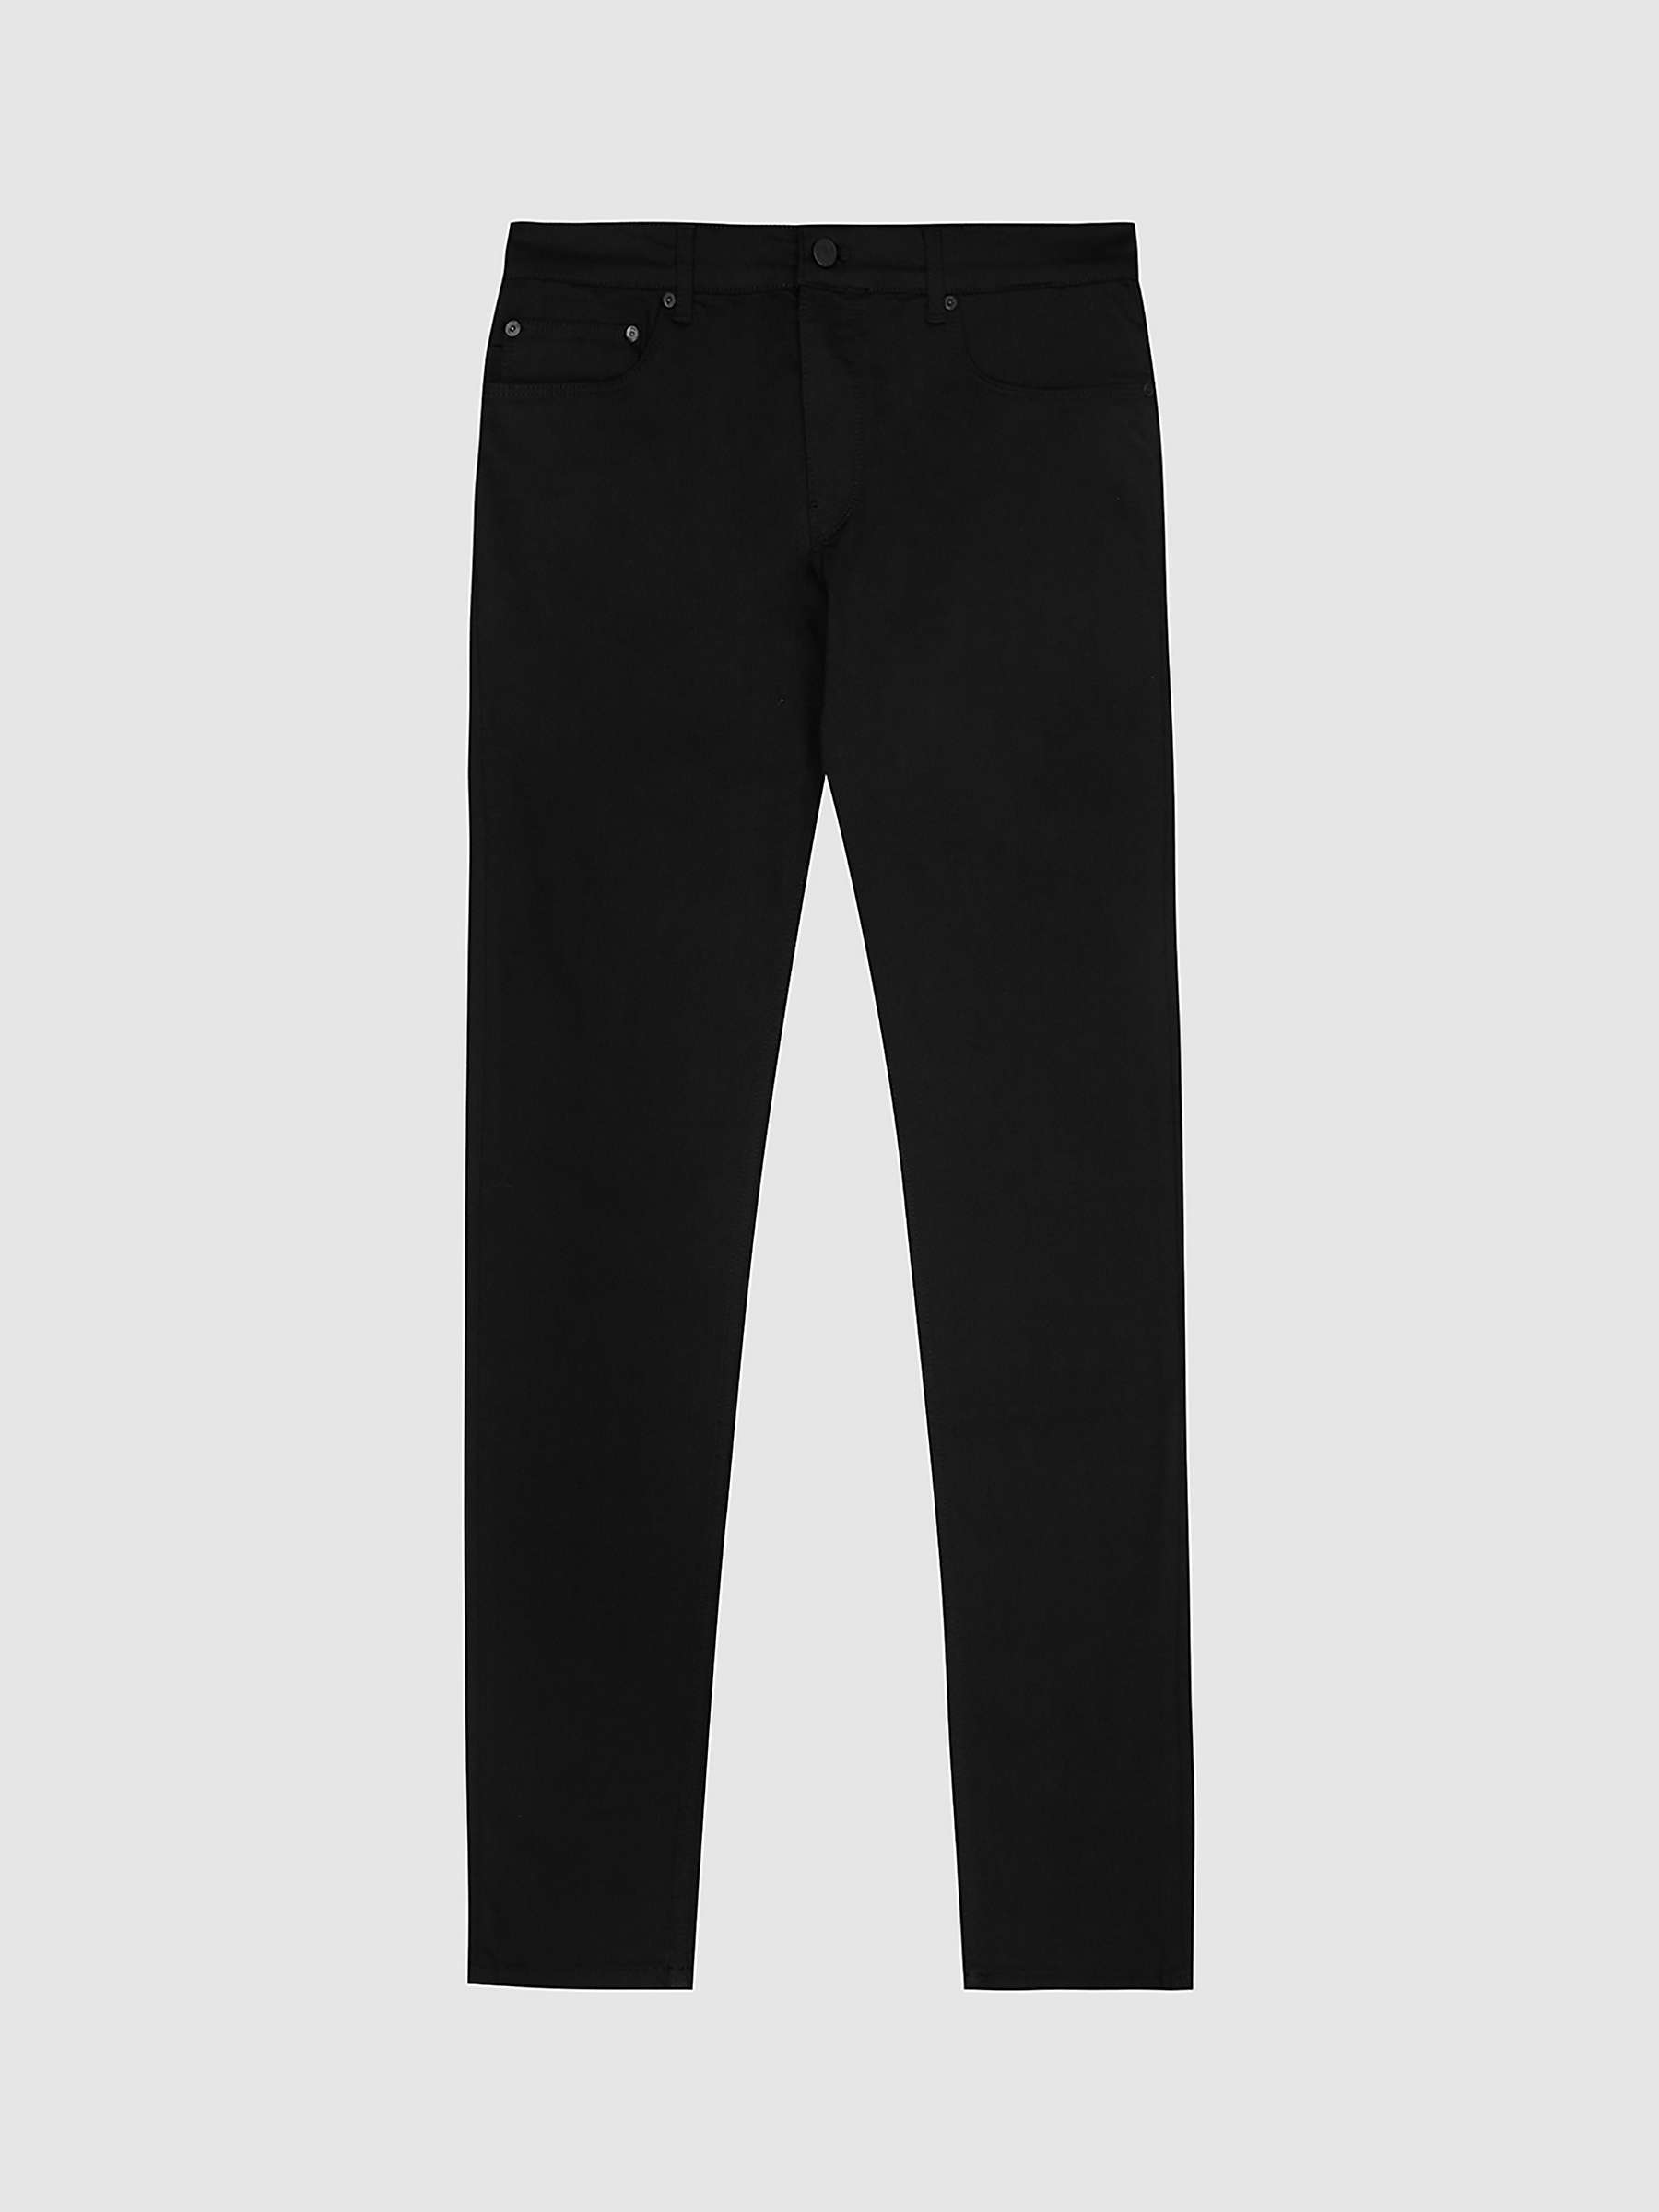 Buy Reiss Jet Slim Fit Jeans, Black Online at johnlewis.com